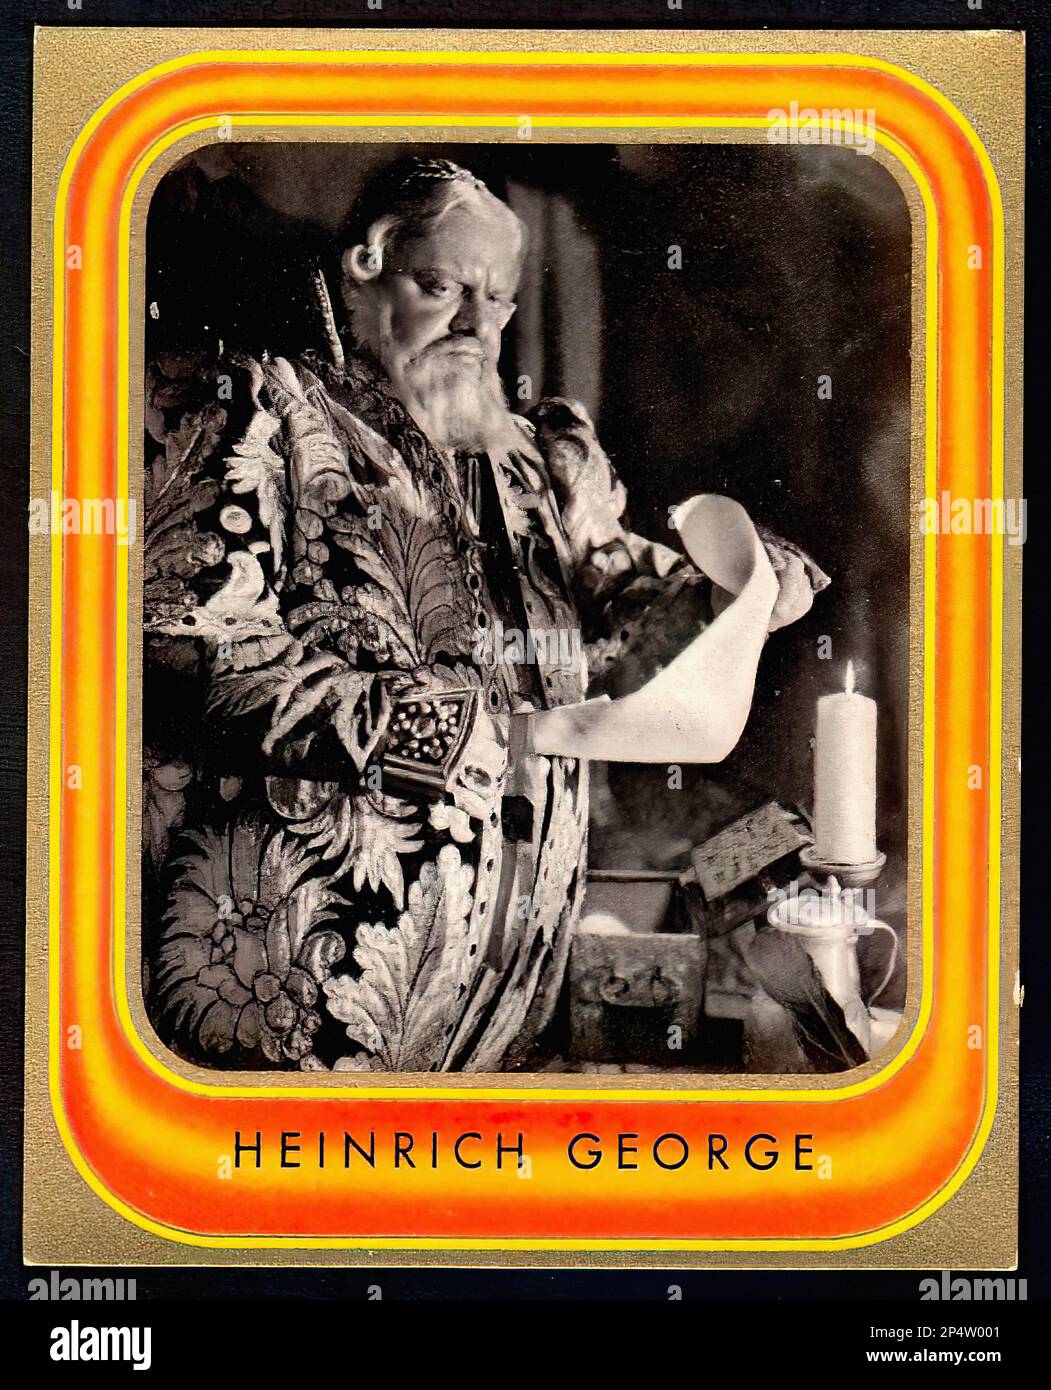 Portrait of Heinrich George - Vintage German Cigarette Card Stock Photo